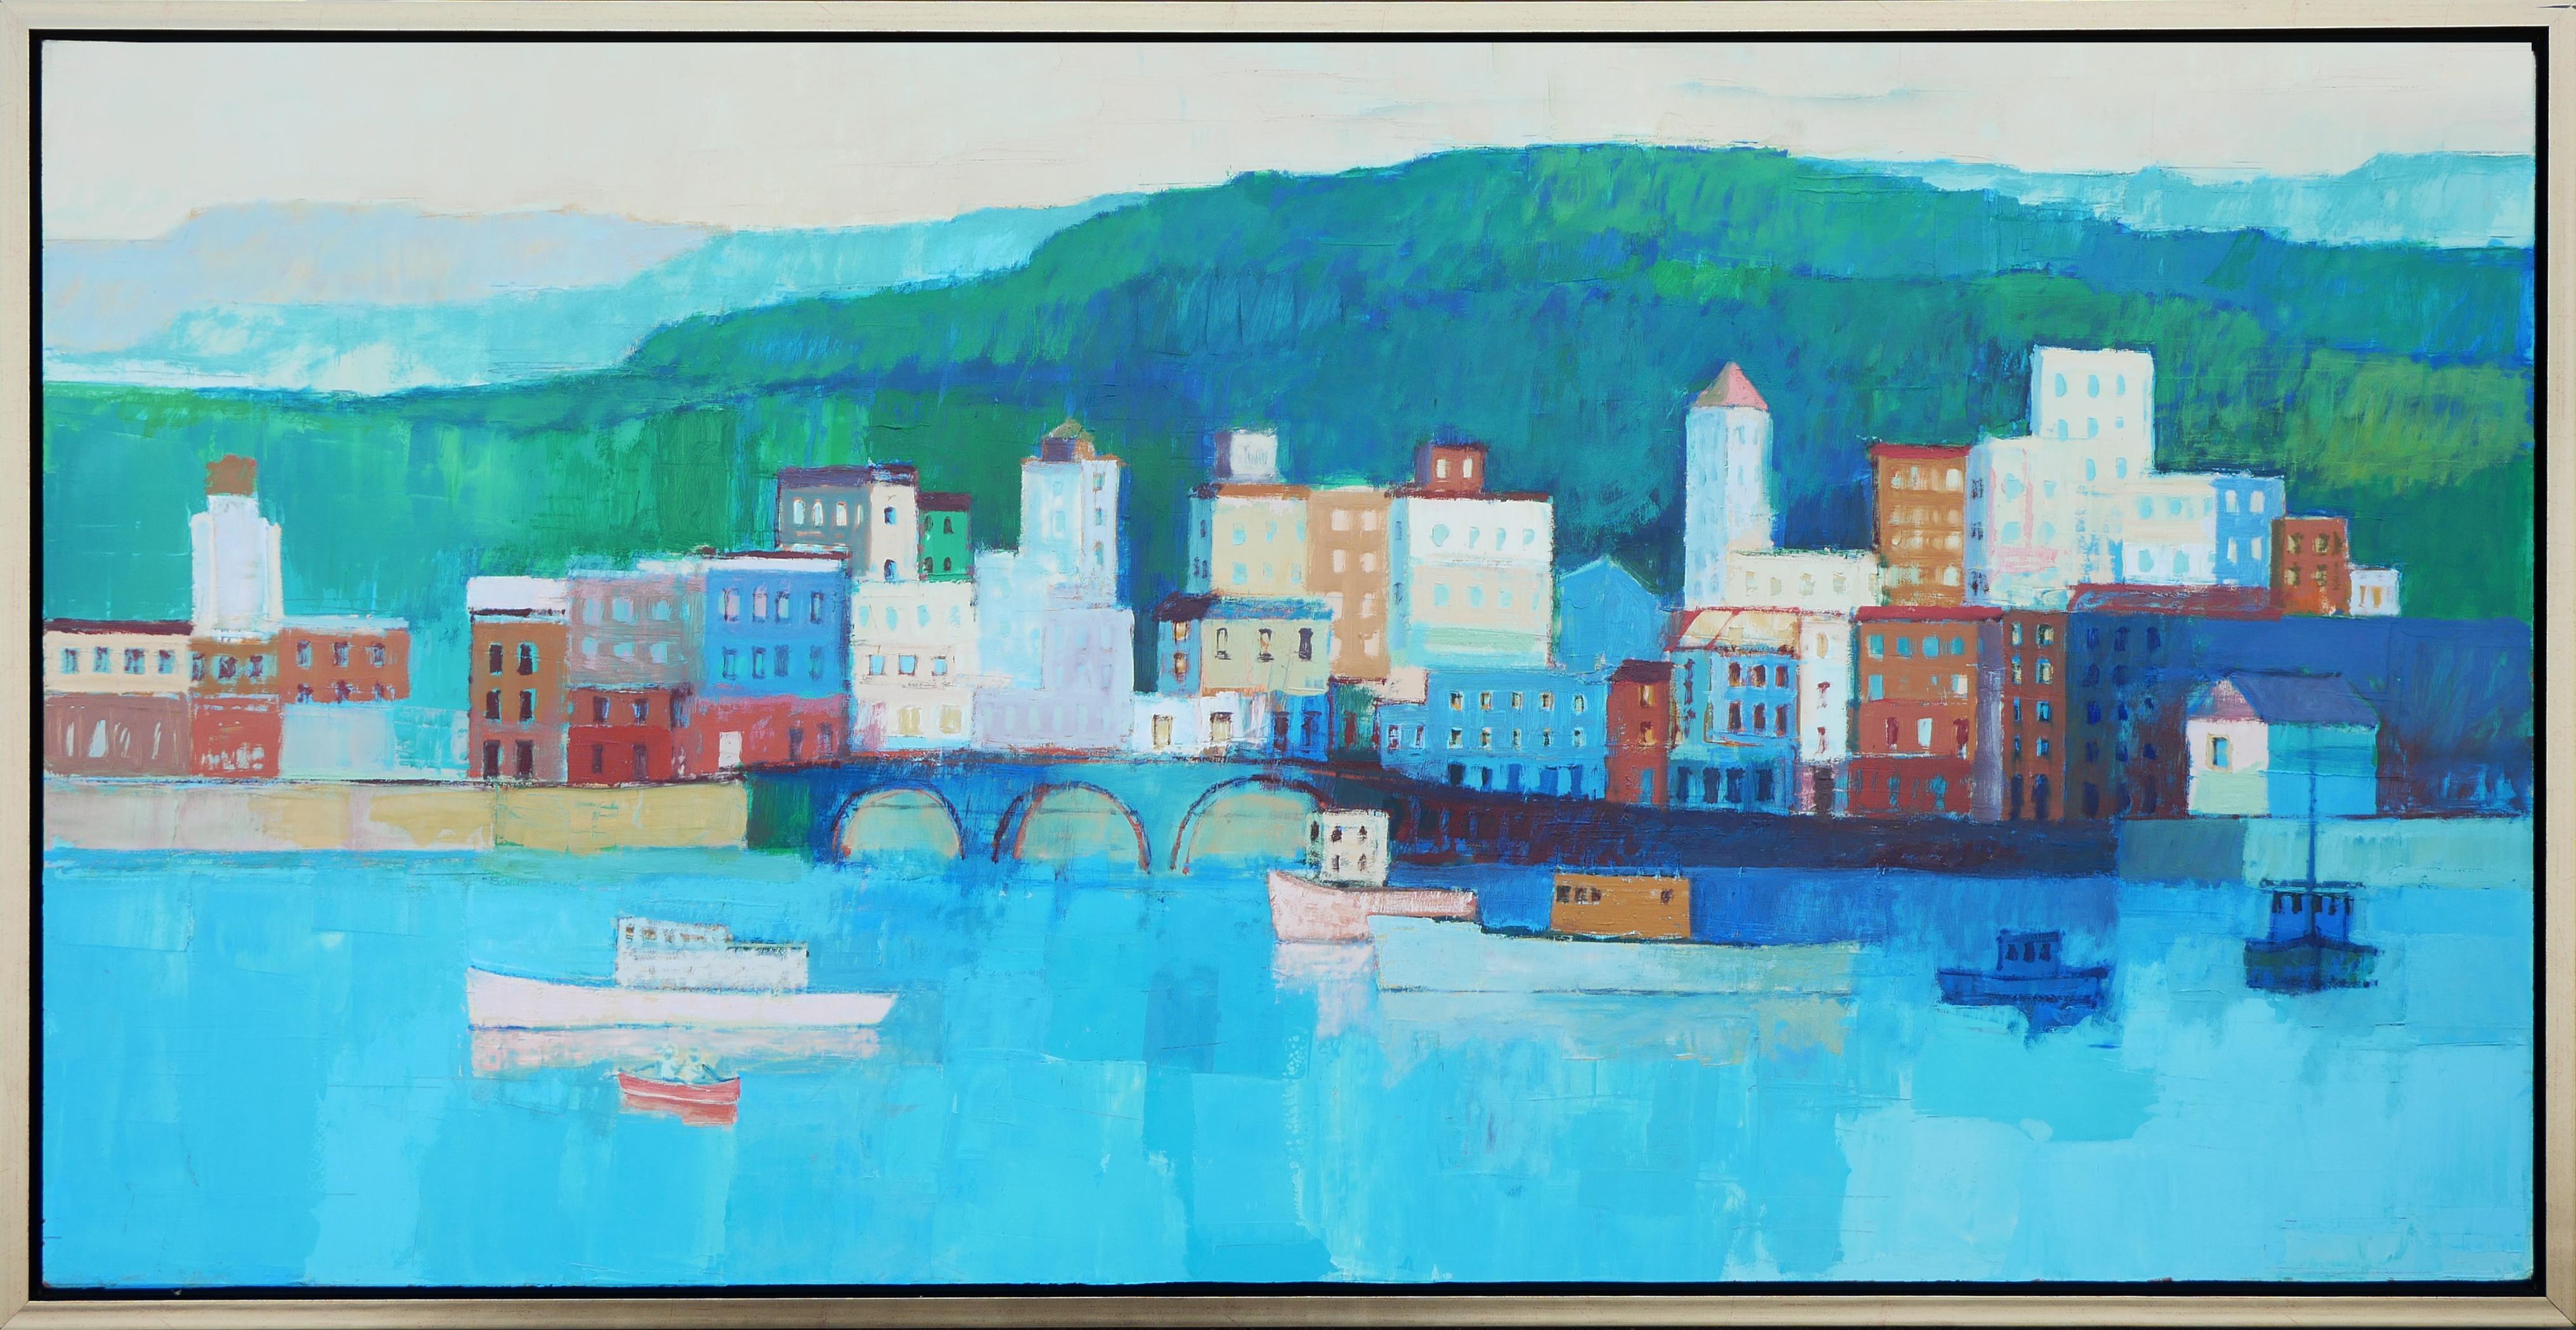 Herb Mears Landscape Painting - "Bay Bridge" Blue-Toned Cityscape Geometric Abstract Landscape